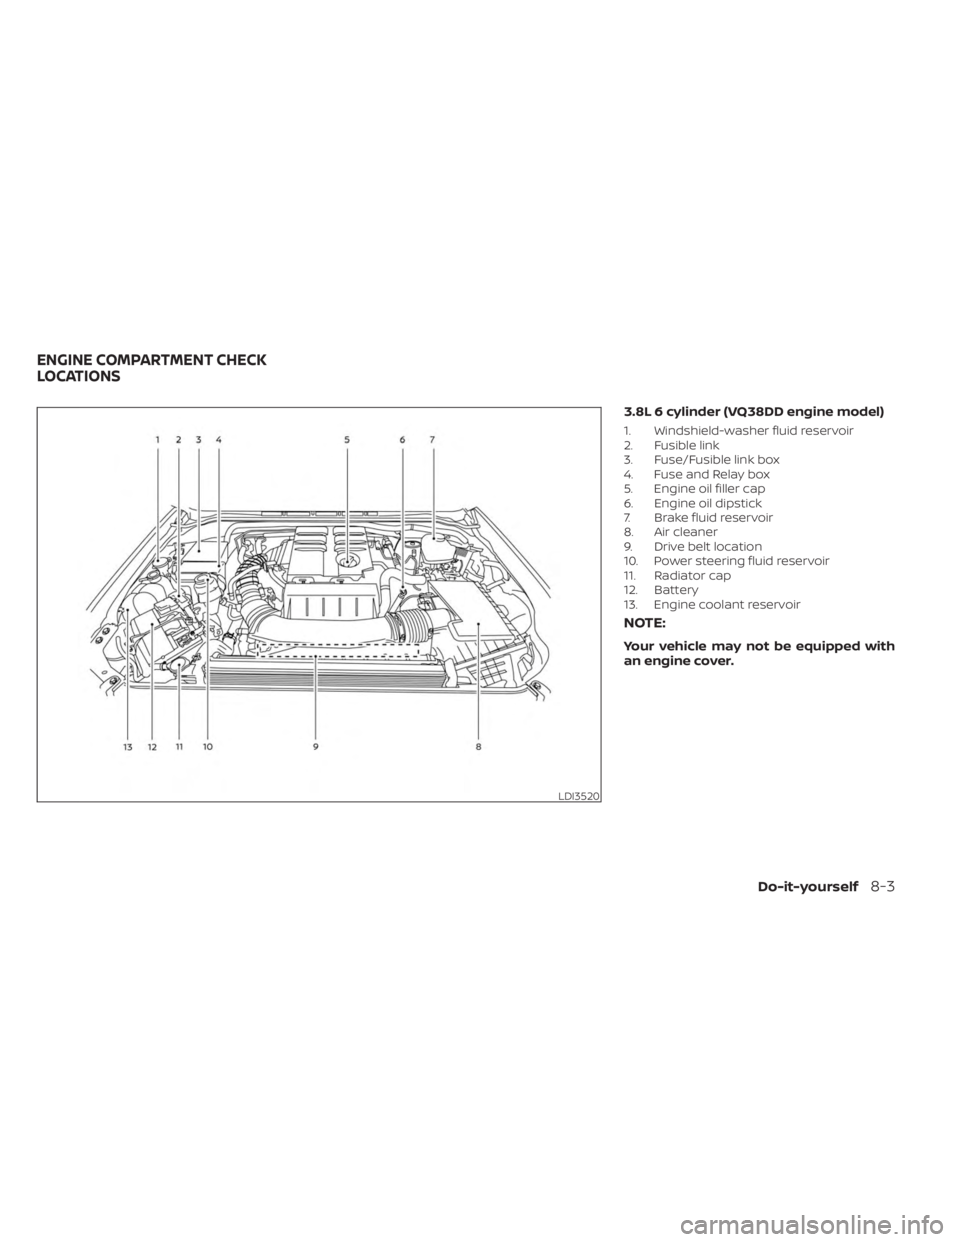 NISSAN FRONTIER 2022  Owner´s Manual 3.8L 6 cylinder (VQ38DD engine model)
1. Windshield-washer fluid reservoir
2. Fusible link
3. Fuse/Fusible link box
4. Fuse and Relay box
5. Engine oil filler cap
6. Engine oil dipstick
7. Brake fluid